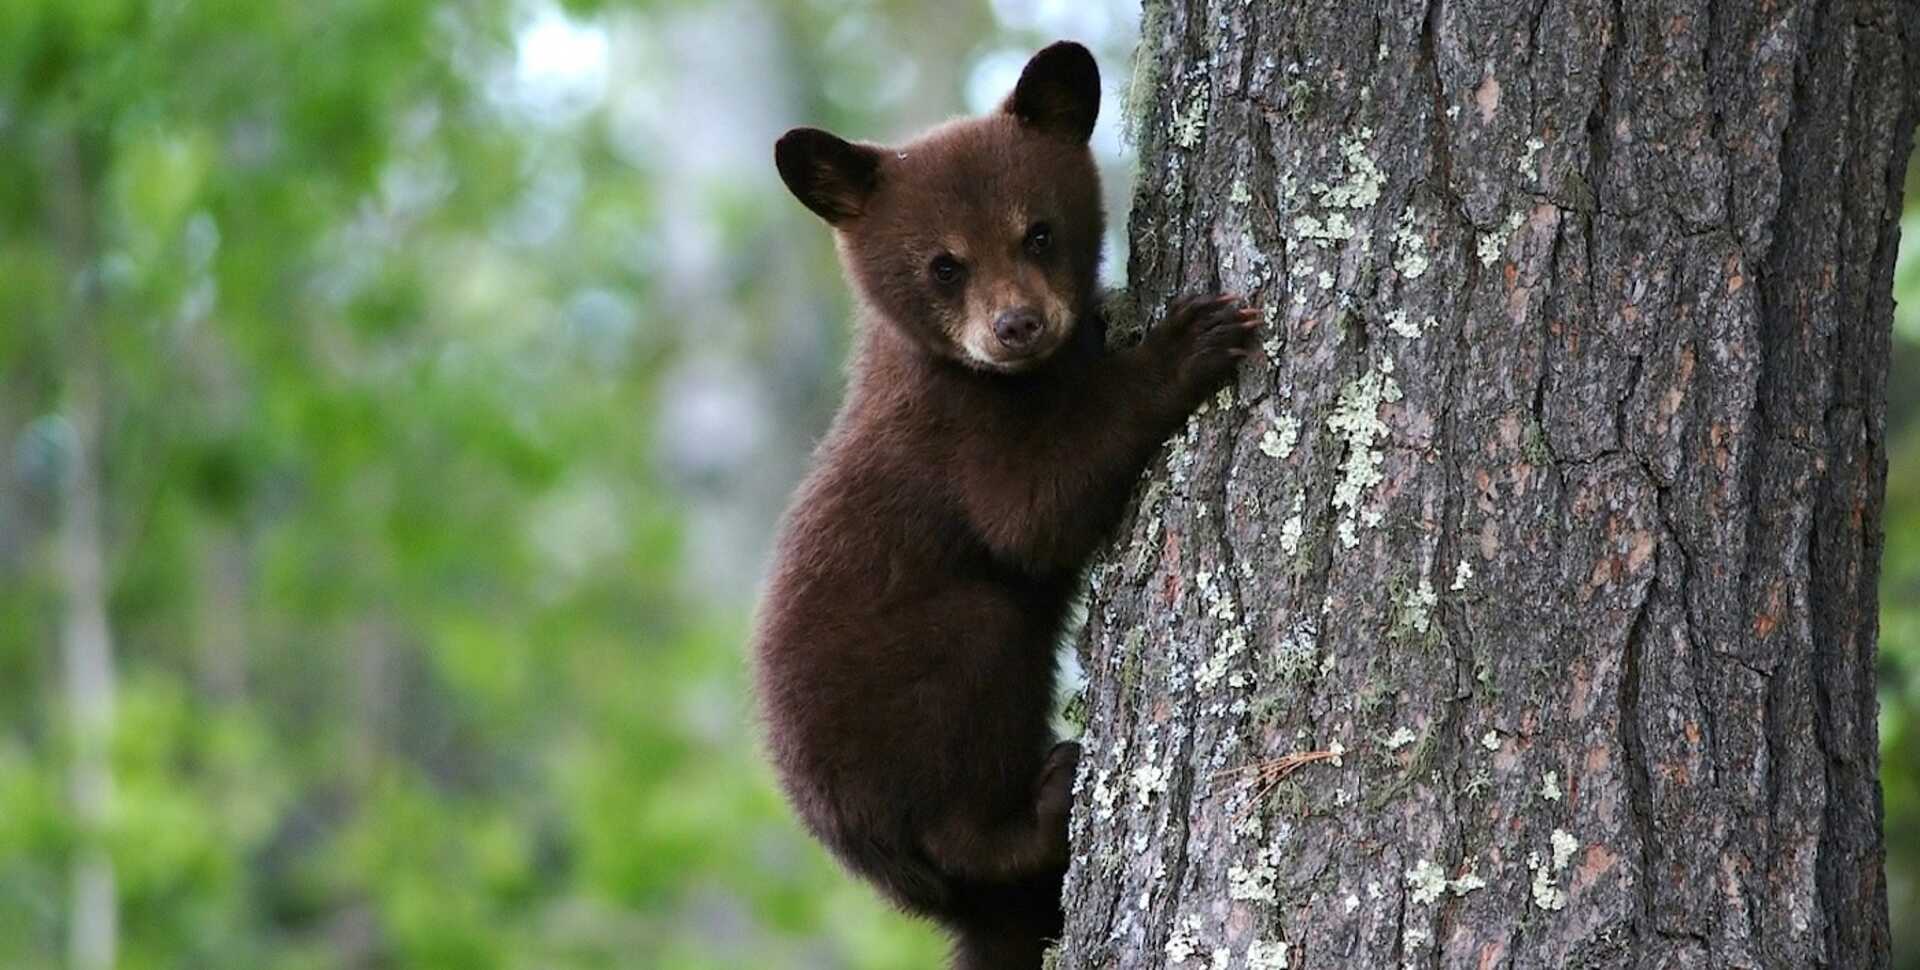 Bear cub climbing a tree in Canada's Great Bear Rainforest